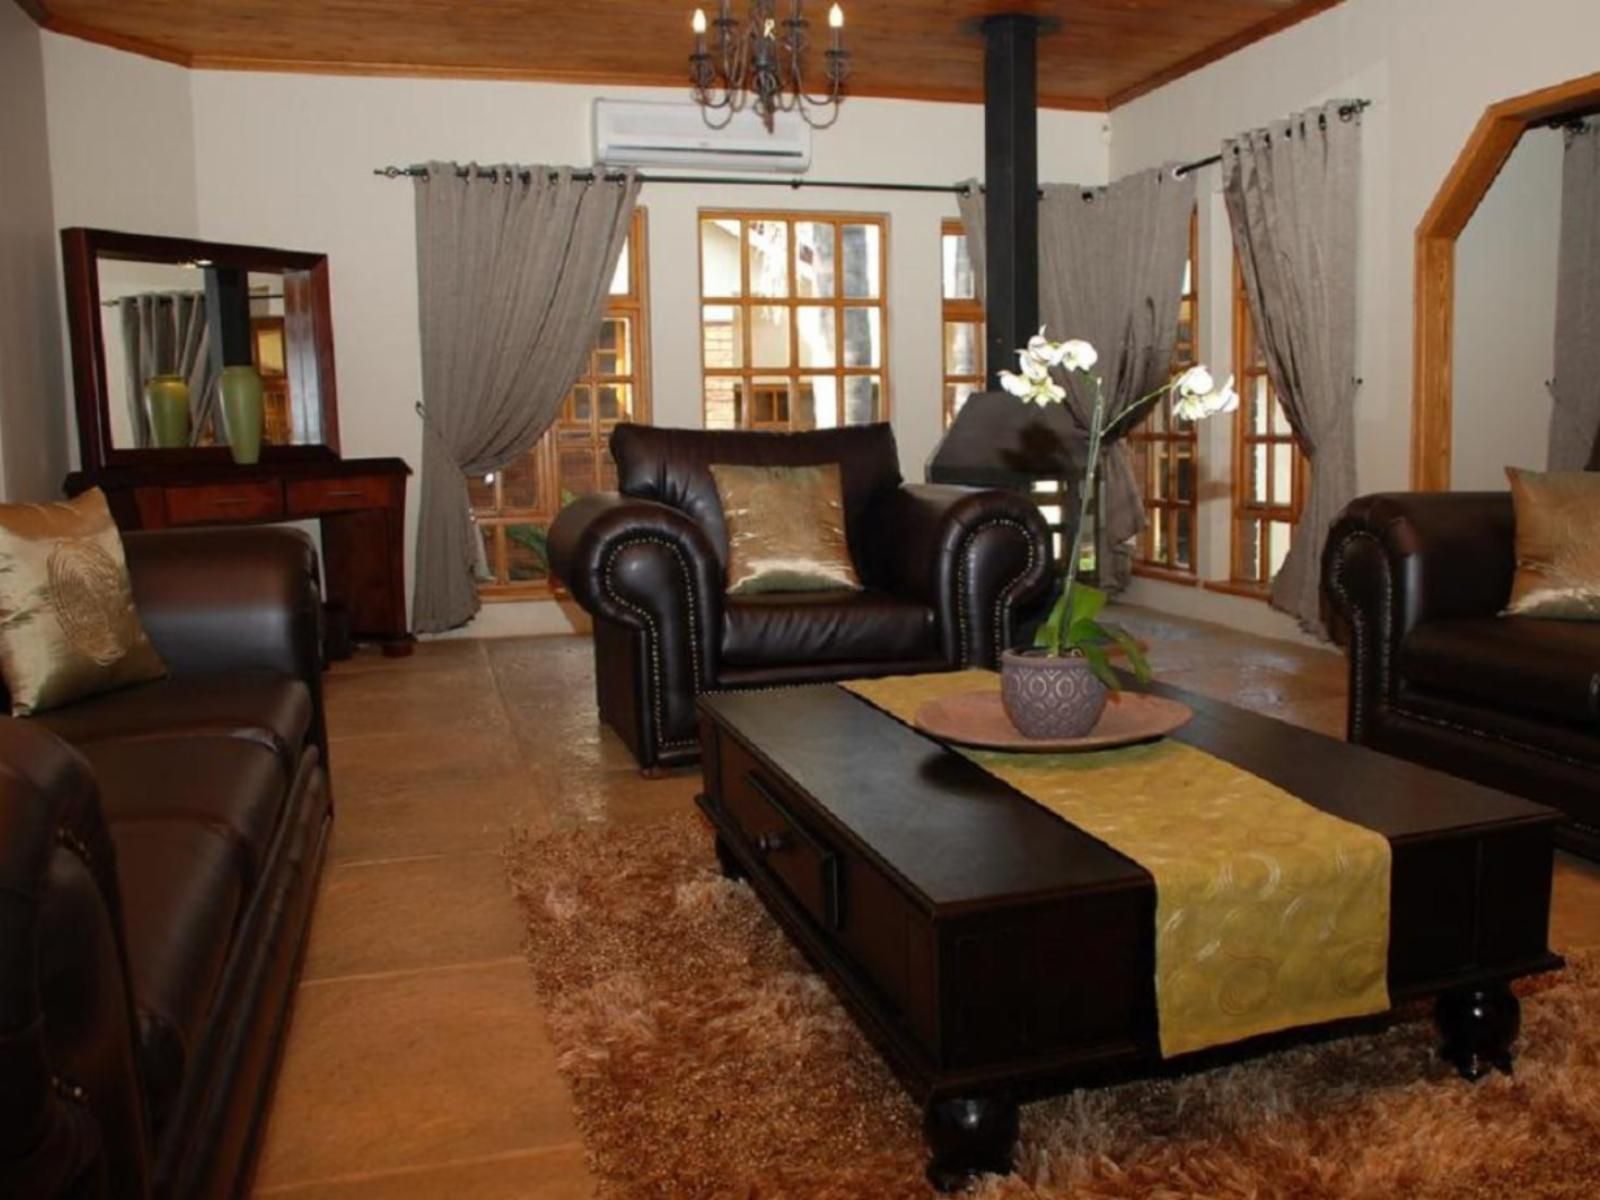 139 On Munnik Guest House Makhado Louis Trichardt Limpopo Province South Africa Living Room